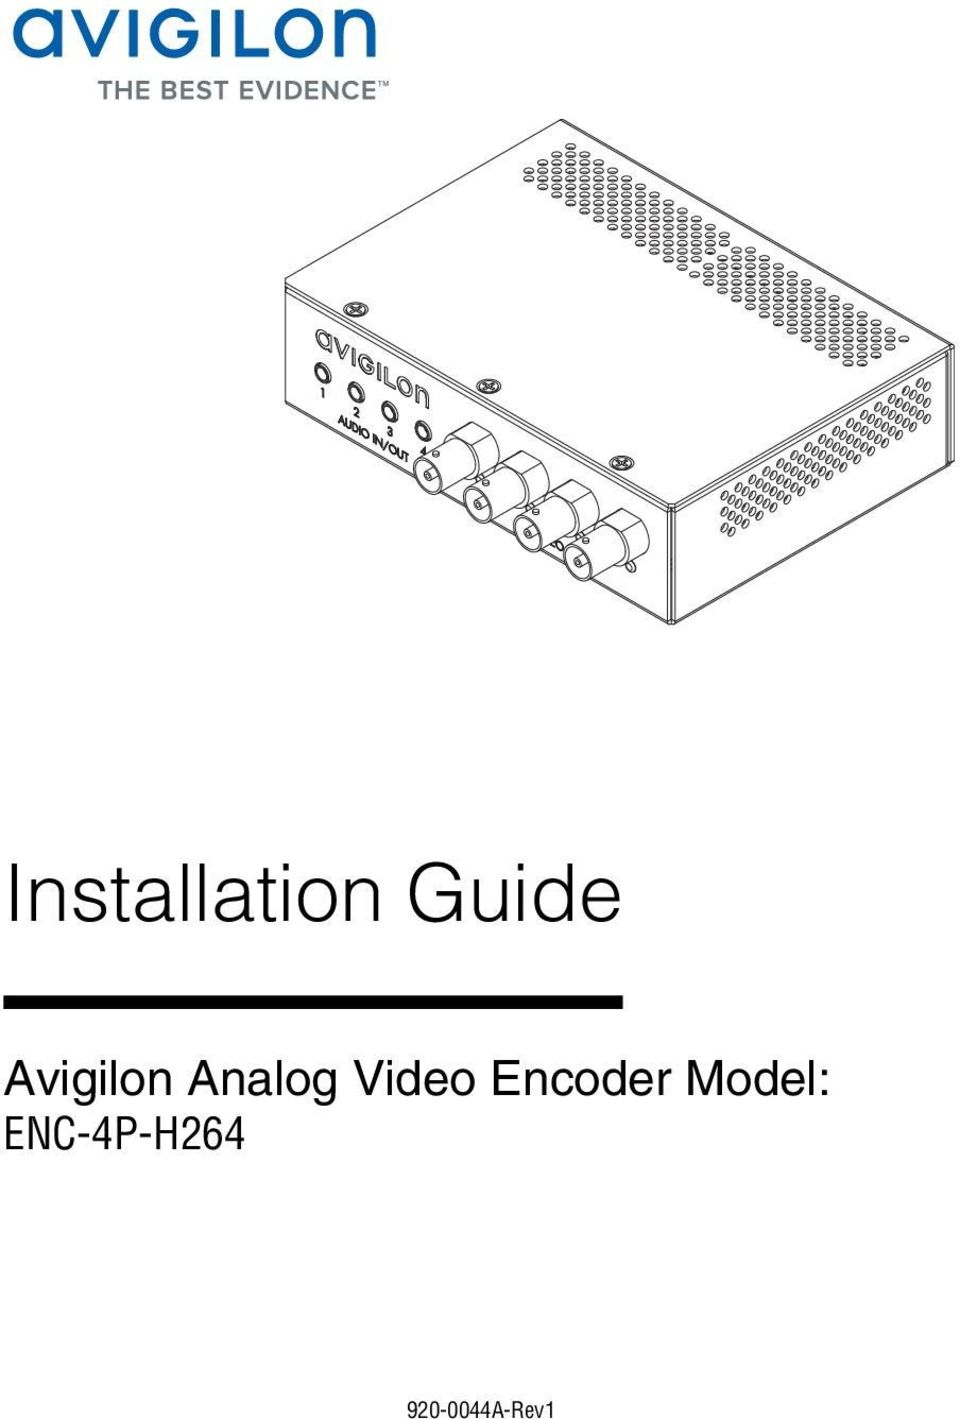 Video Encoder Model: